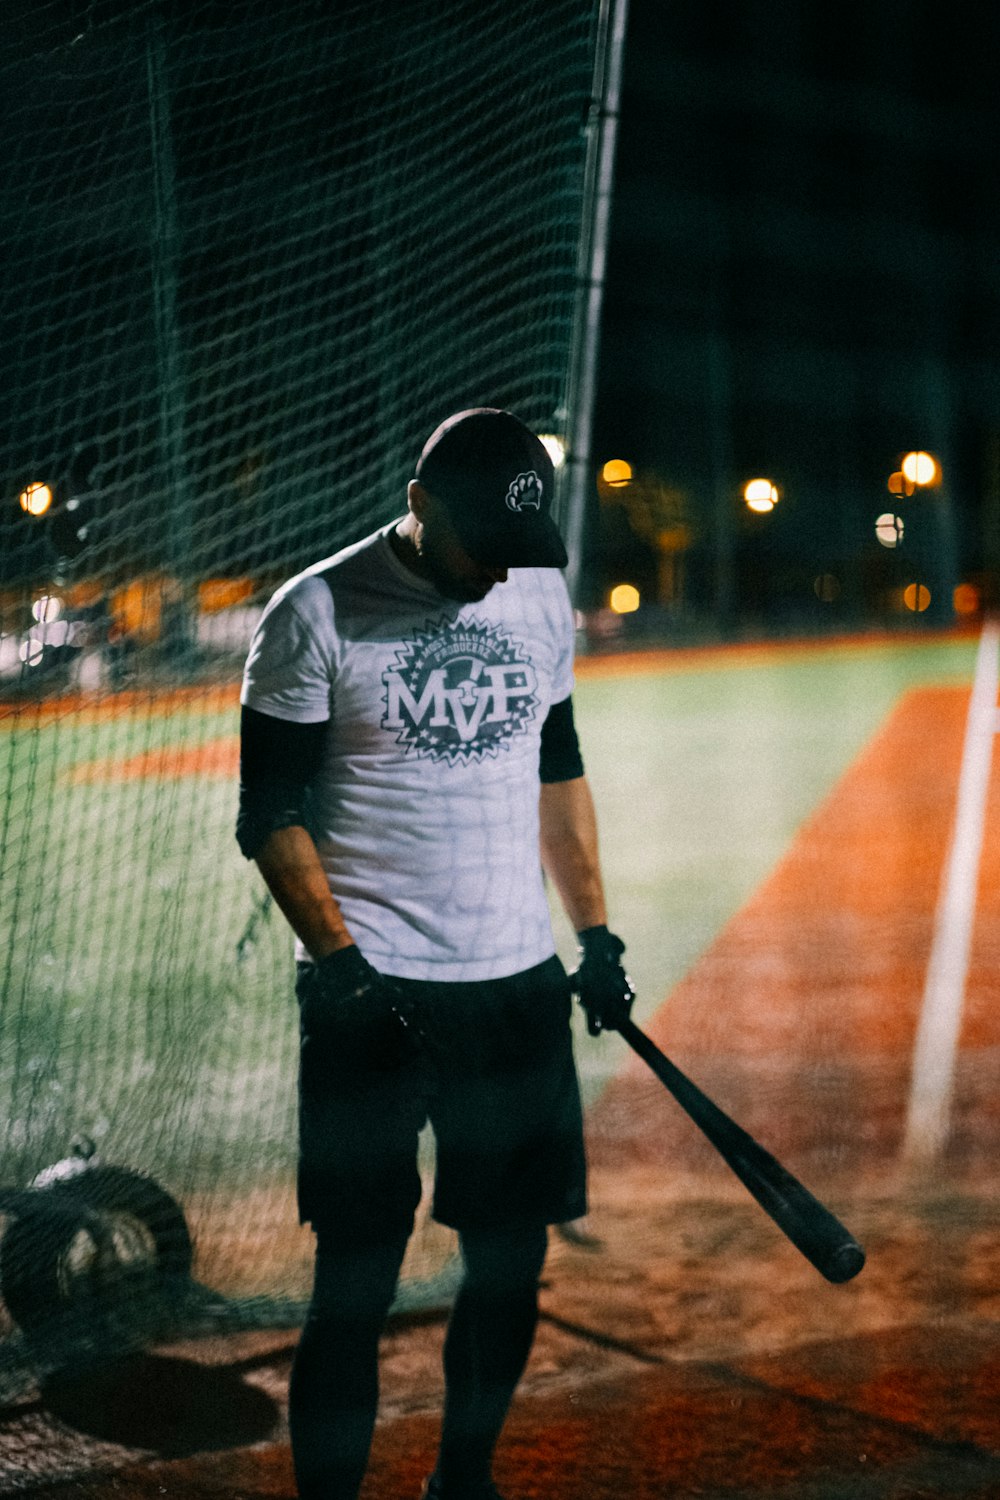 a man holding a baseball bat on a baseball field